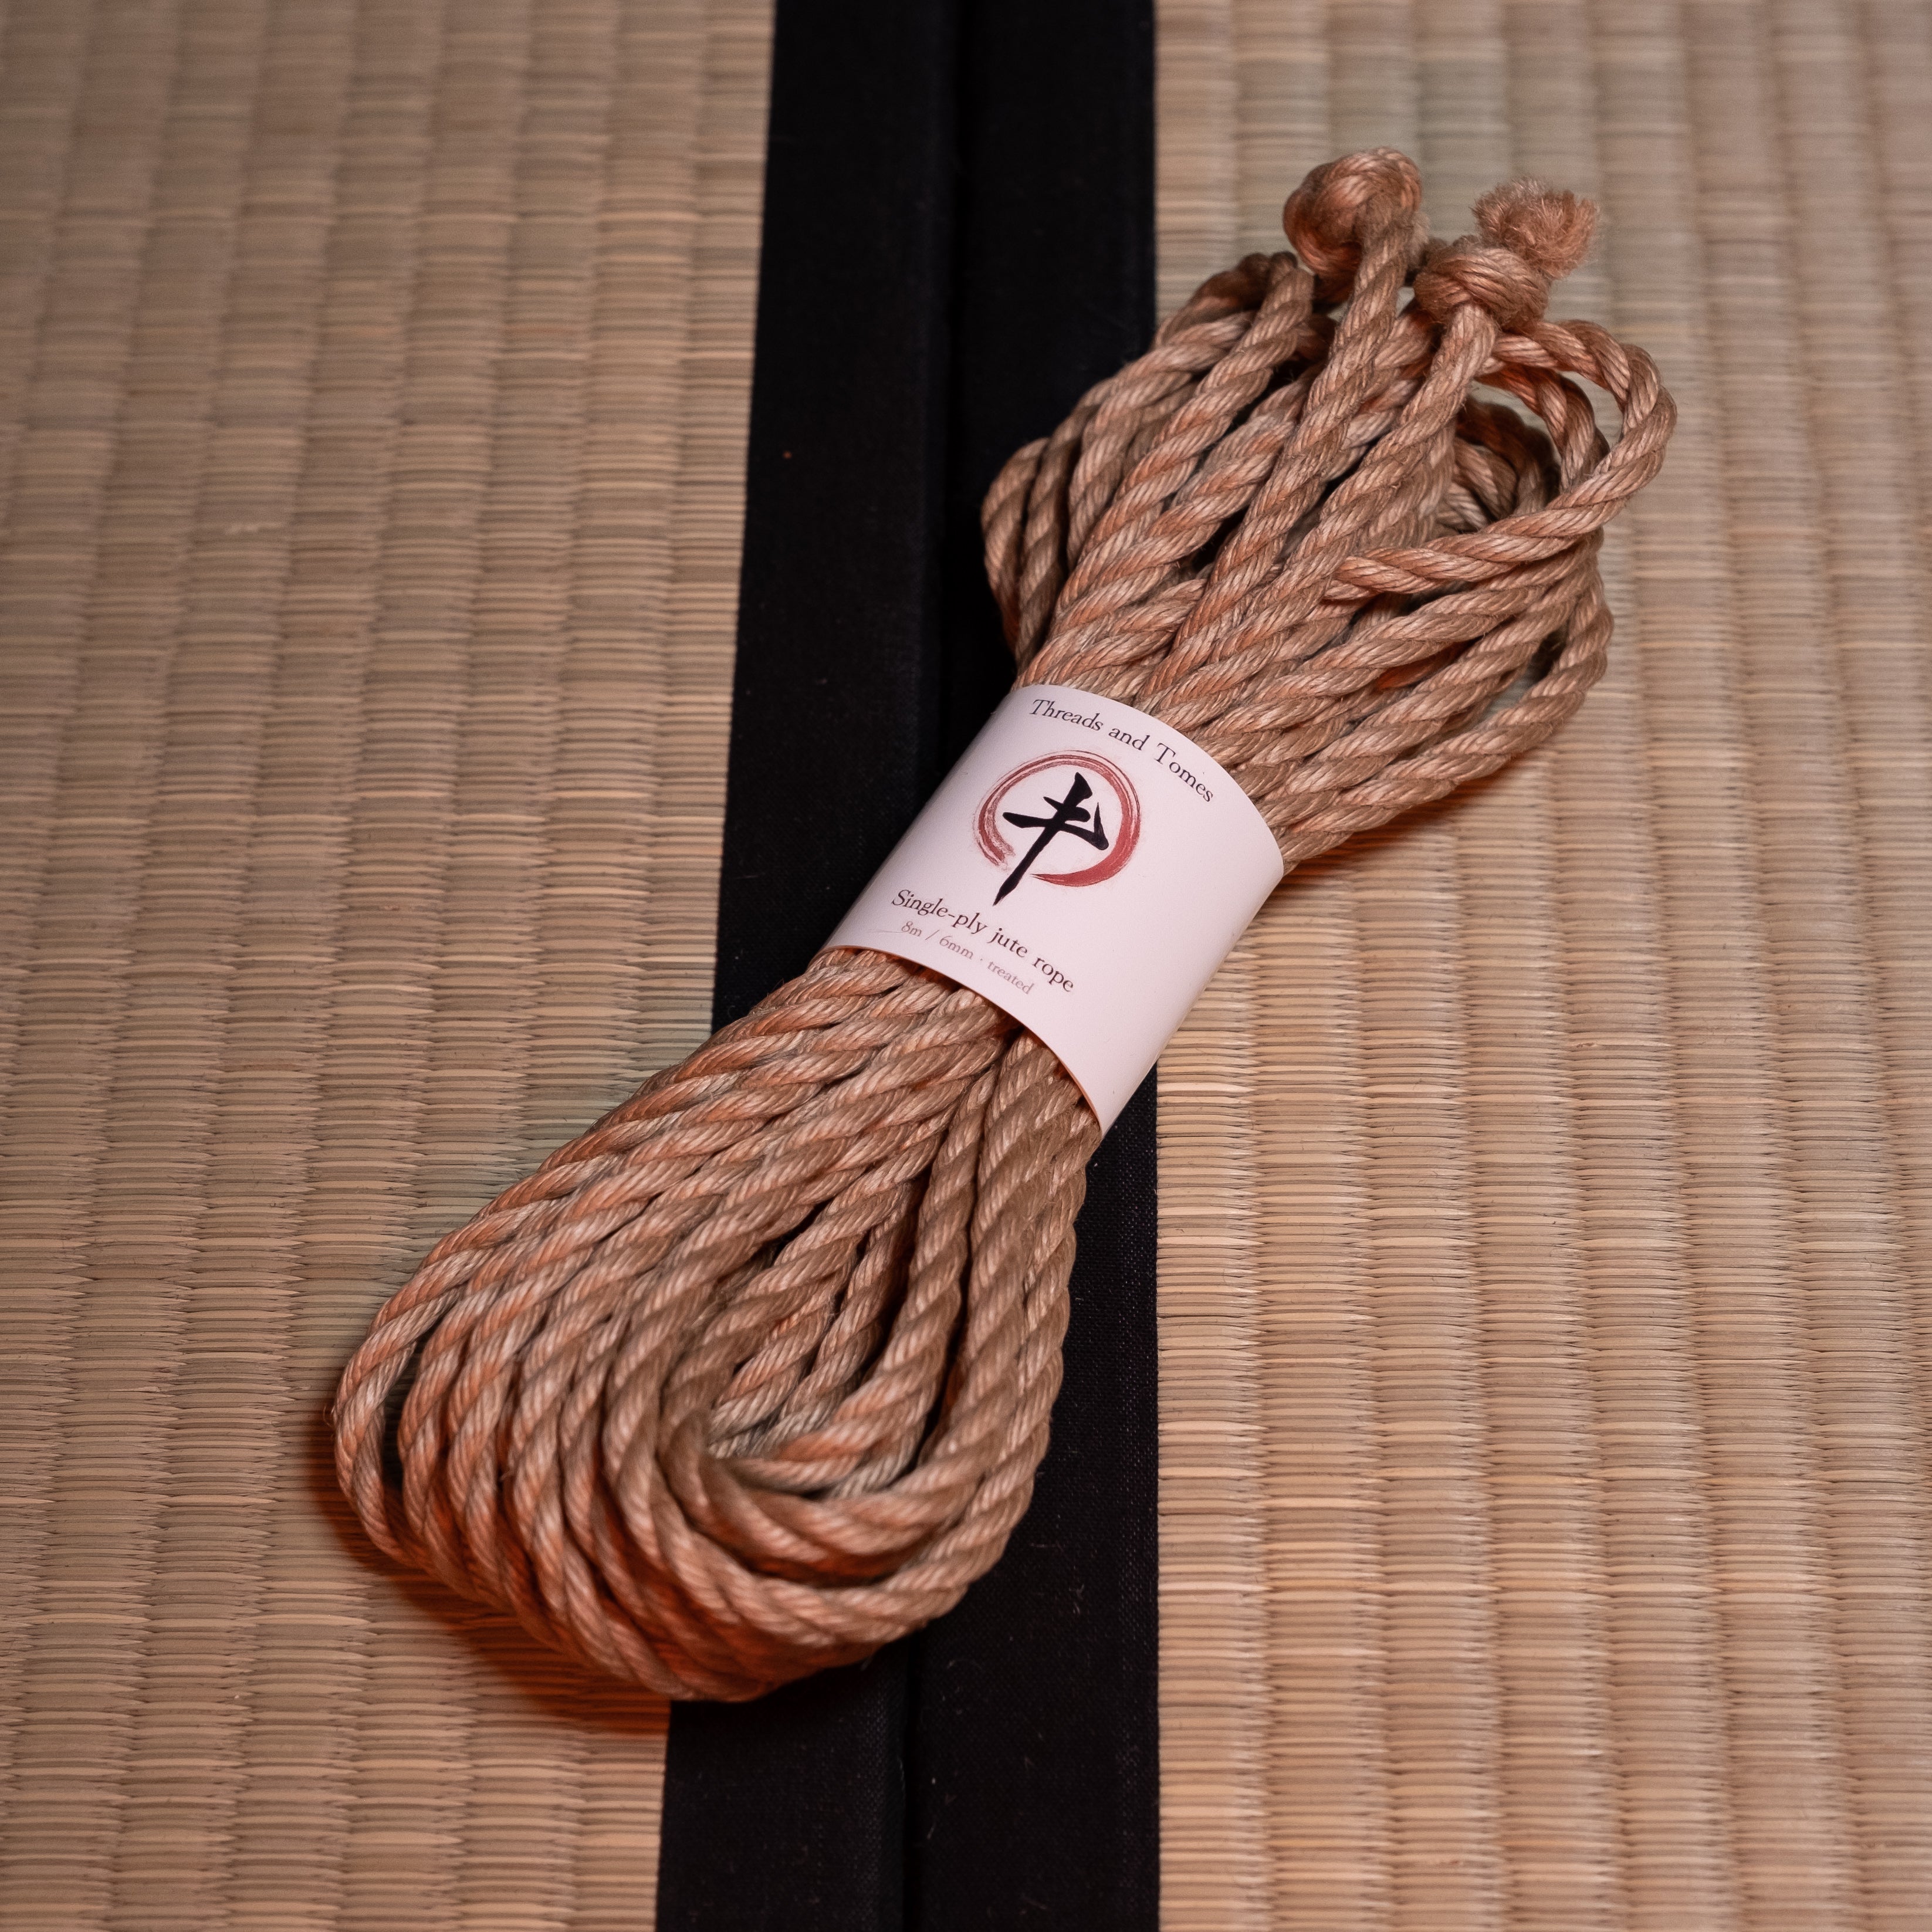 Asanawa Xtra reinforced jute shibari rope 6mm x 10m, India | Ubuy